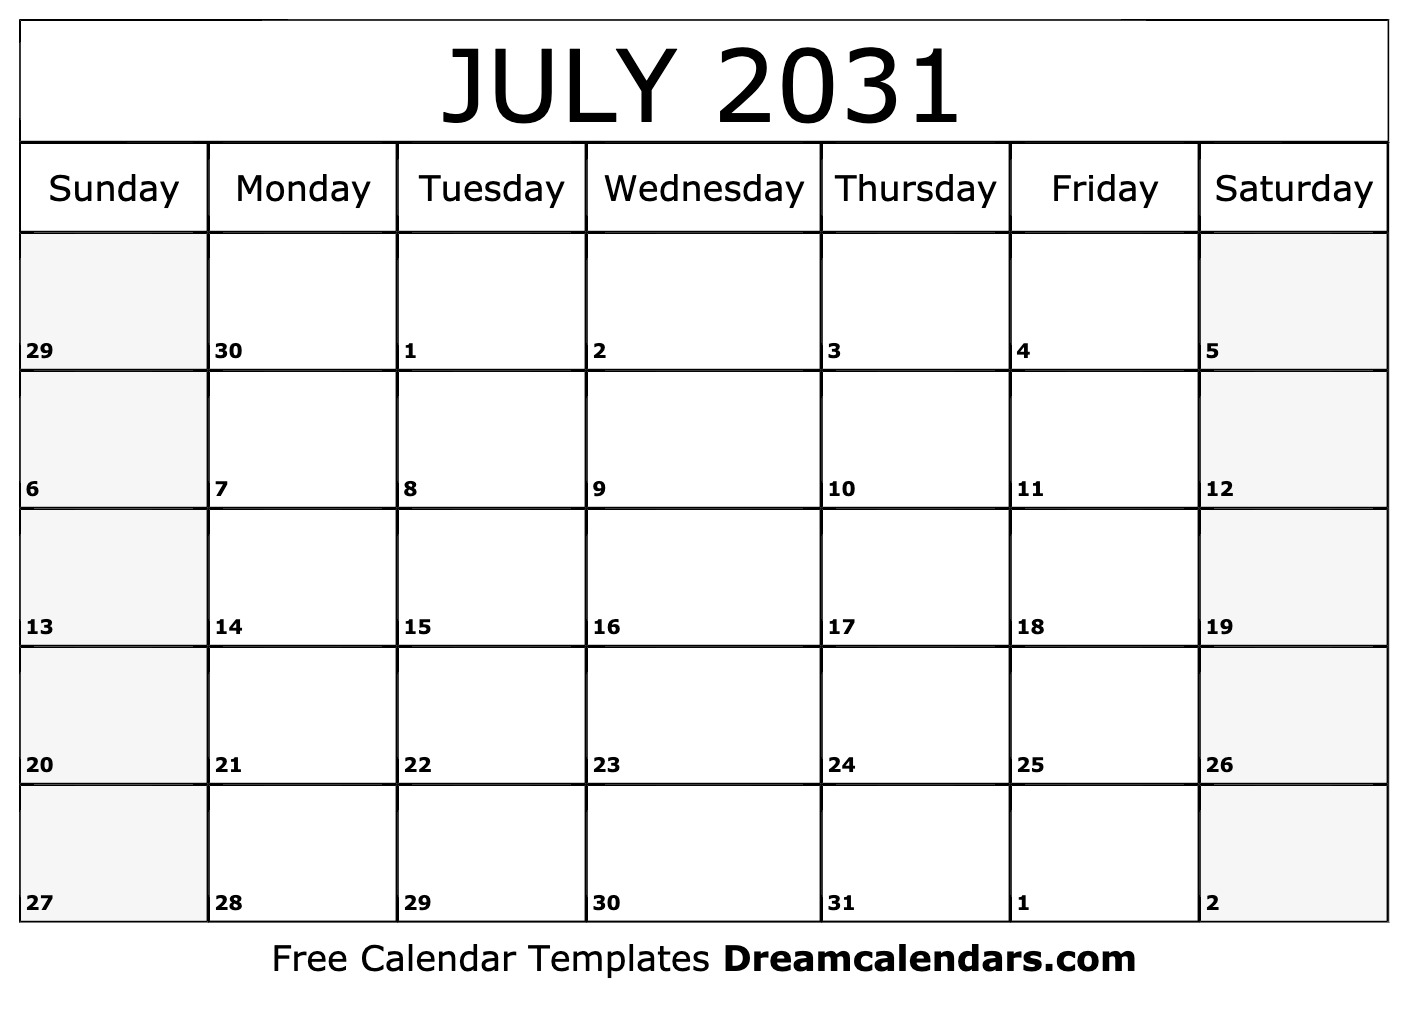 July 2031 Calendar Free Blank Printable With Holidays